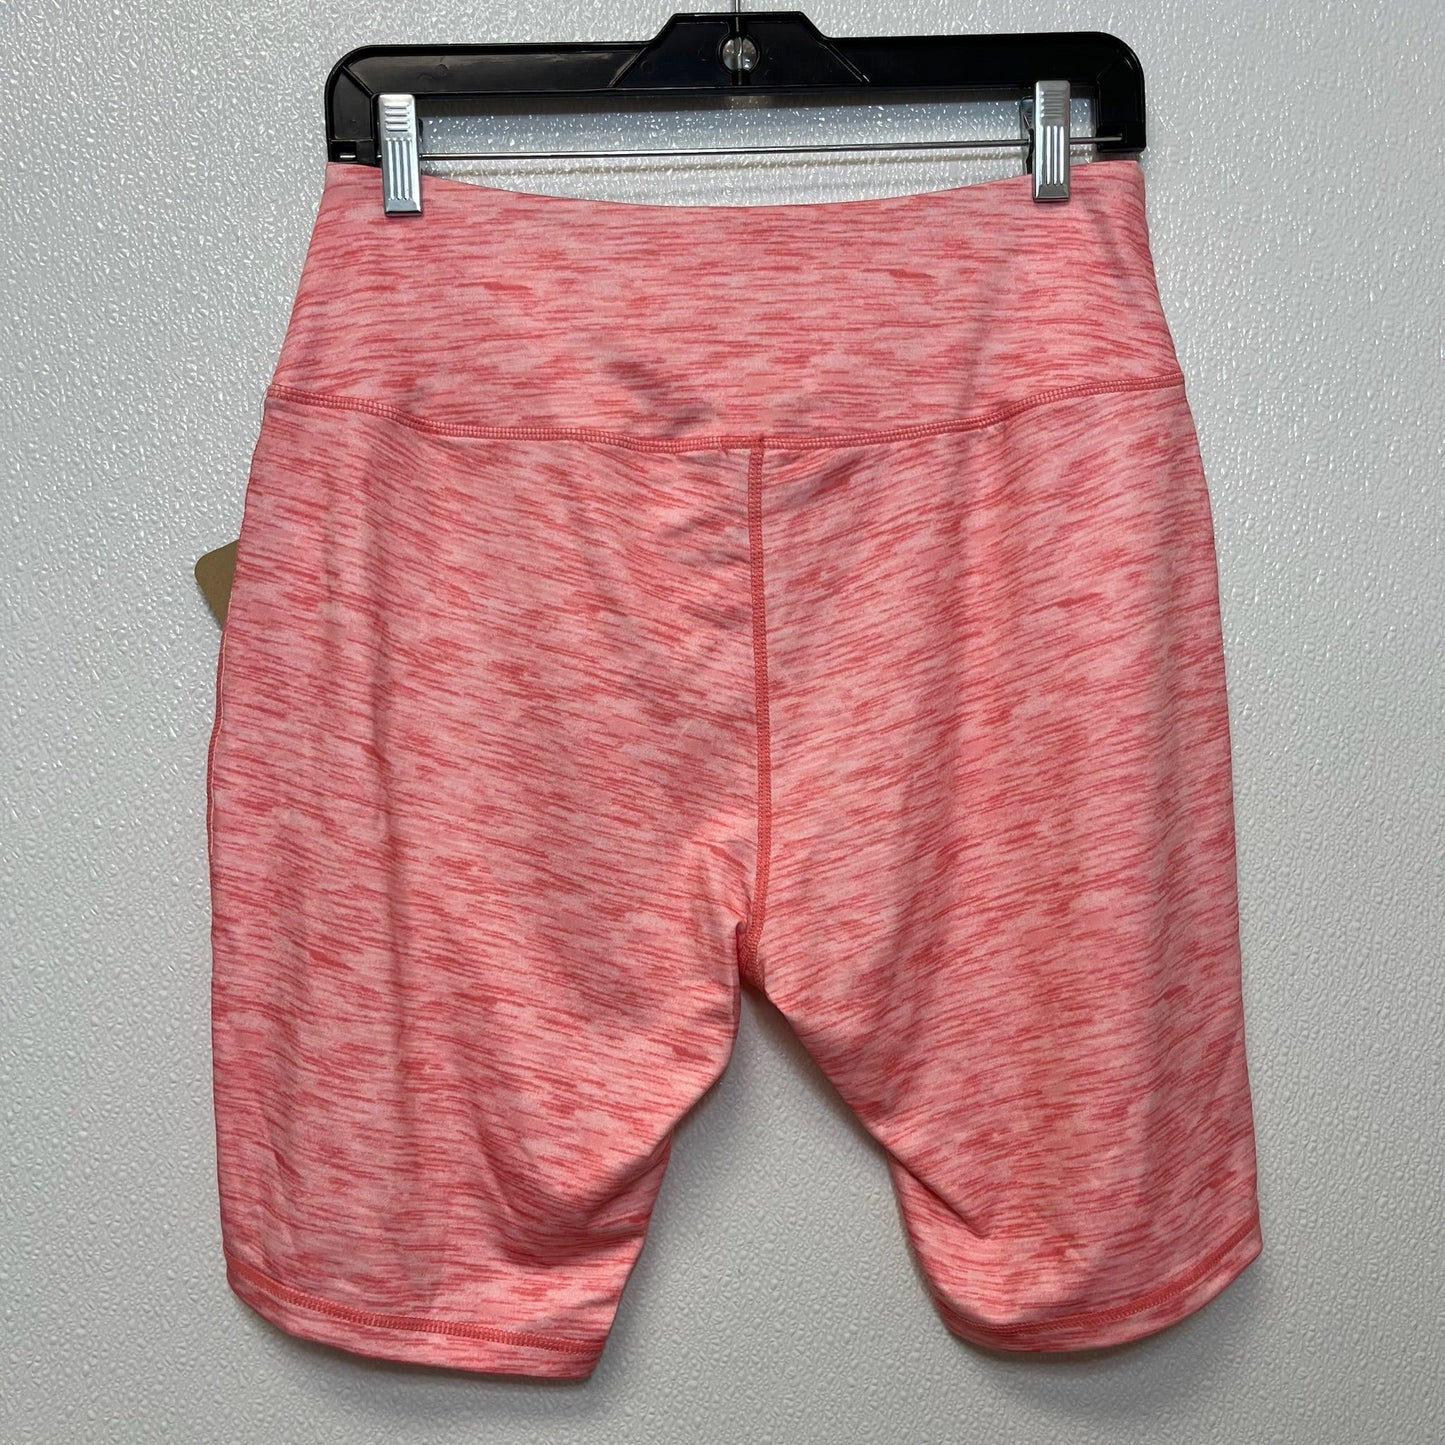 Pink Athletic Shorts Reebok, Size Xl